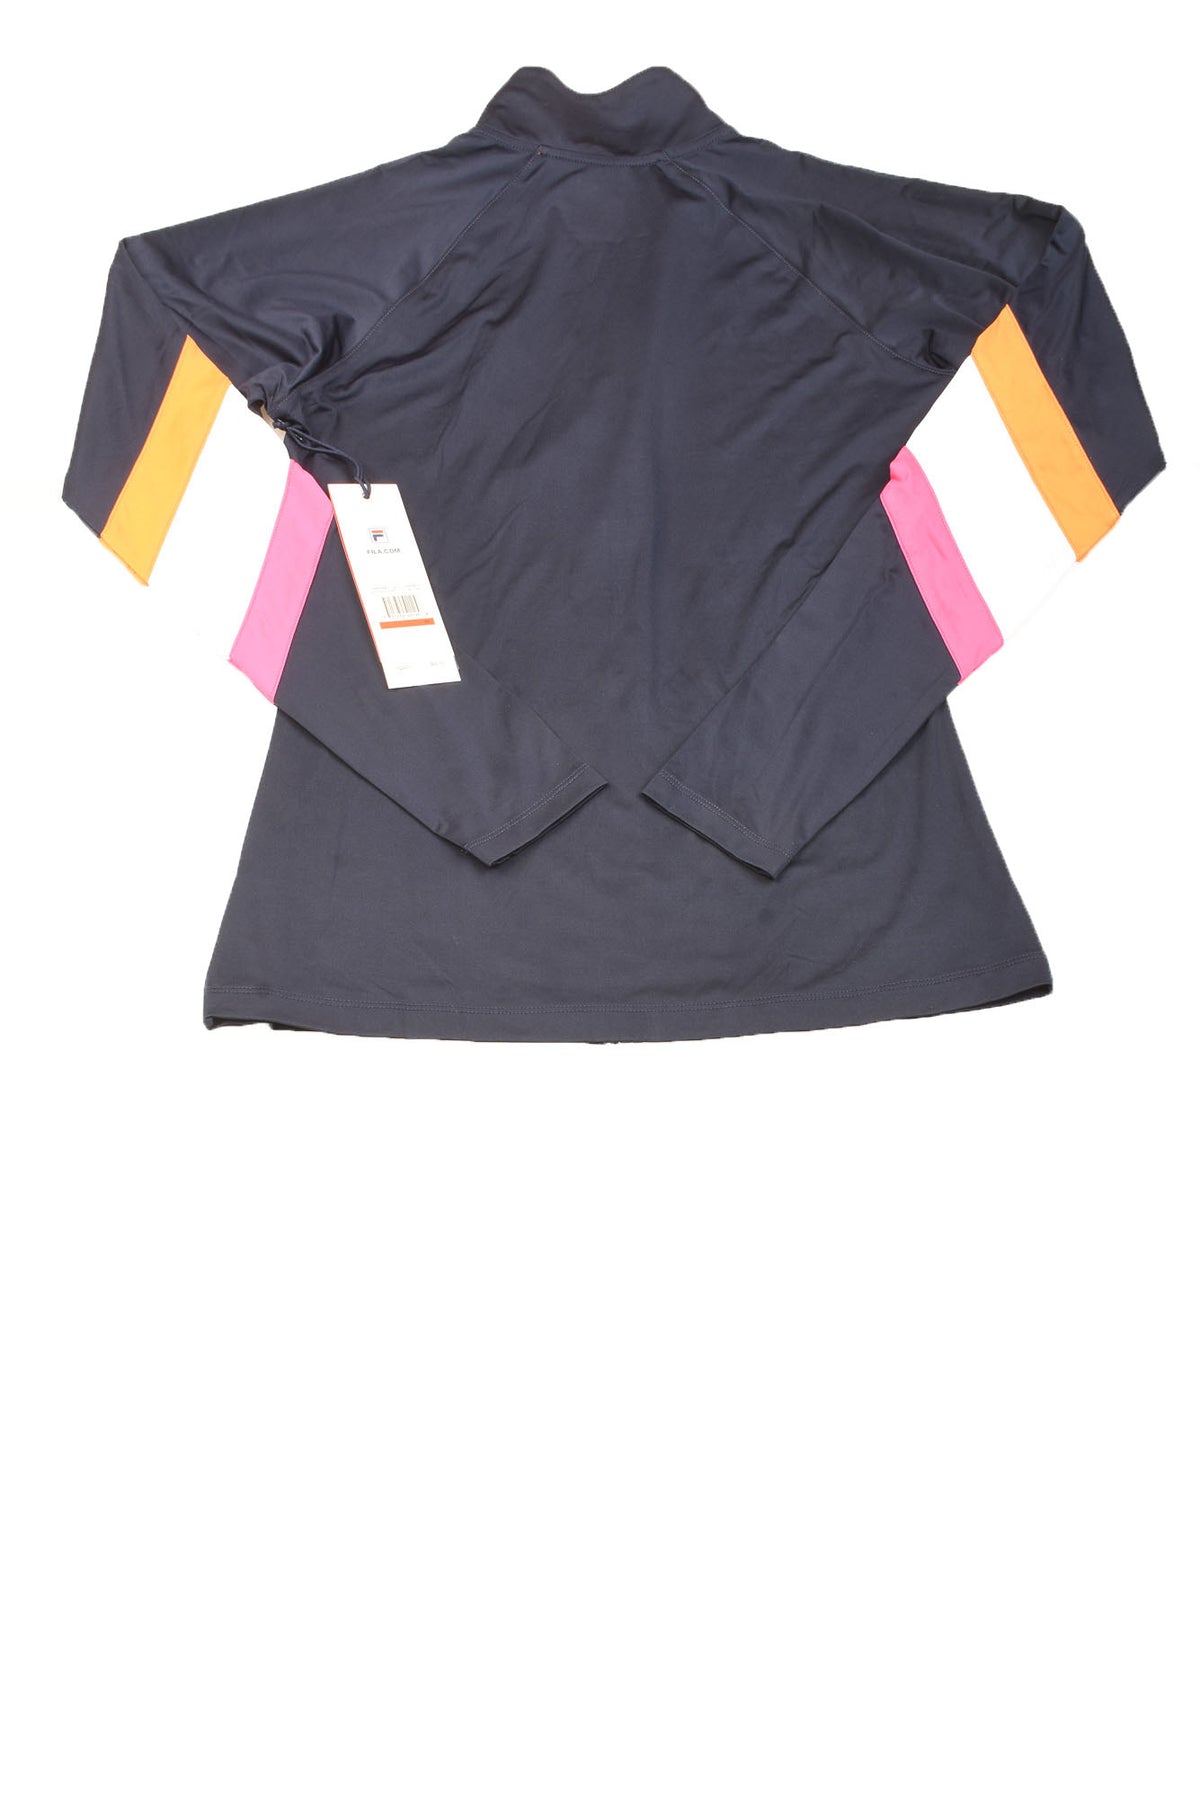 Fila Size XS Women's Activewear Jacket - Your Designer Thrift